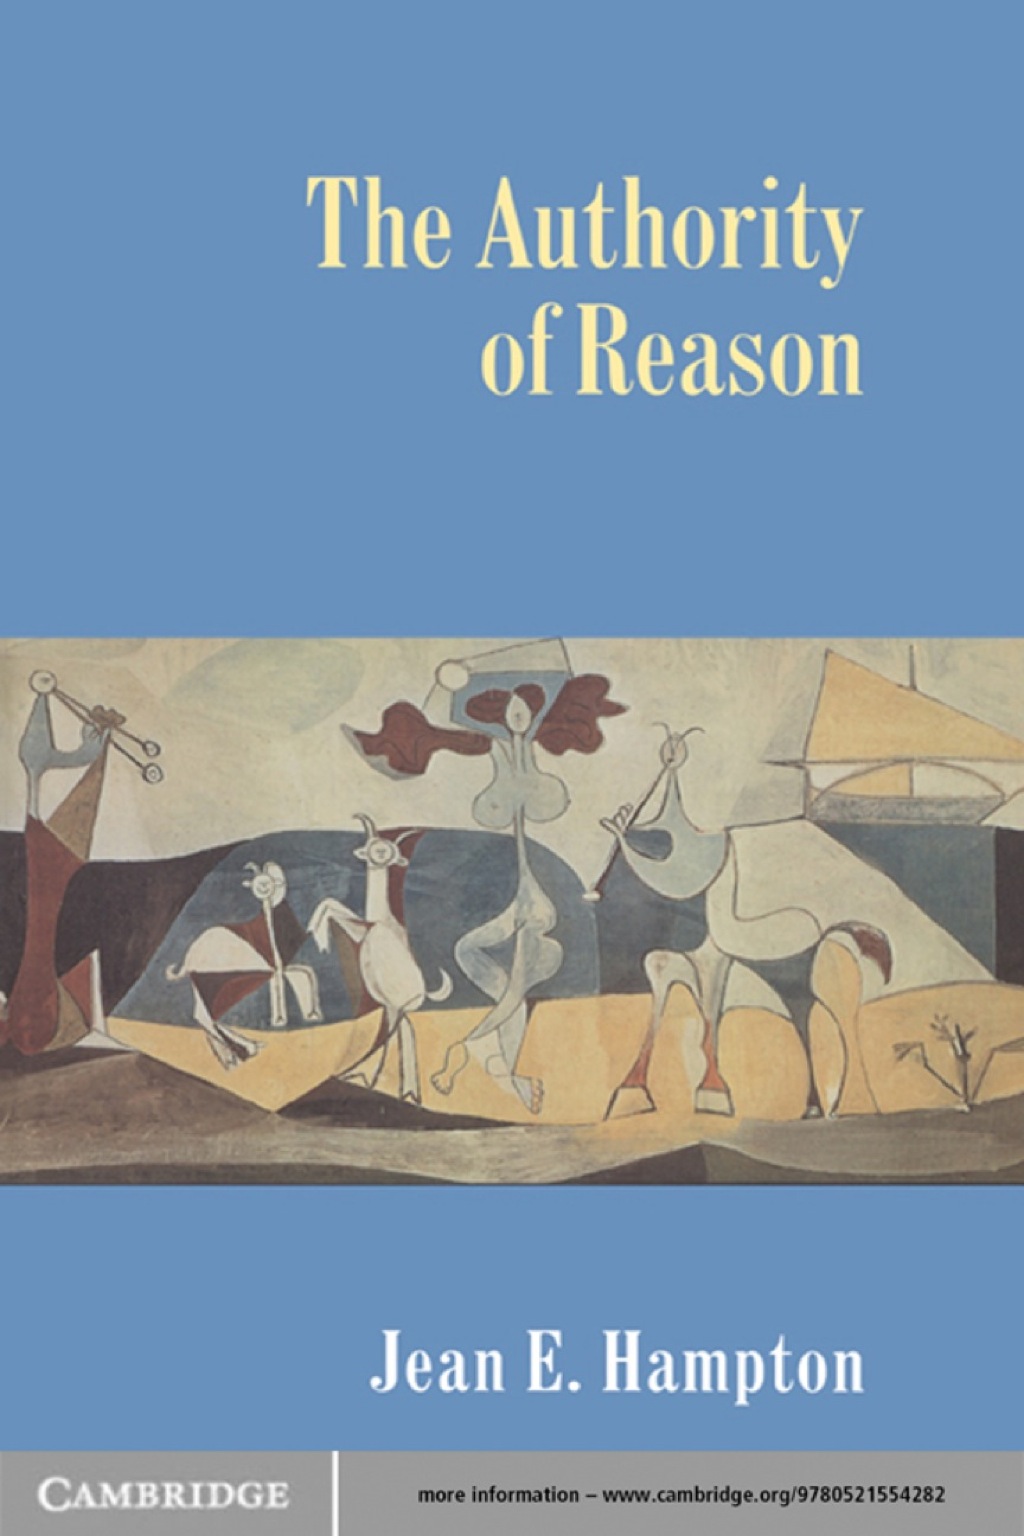 The Authority of Reason (eBook) - Jean E. Hampton